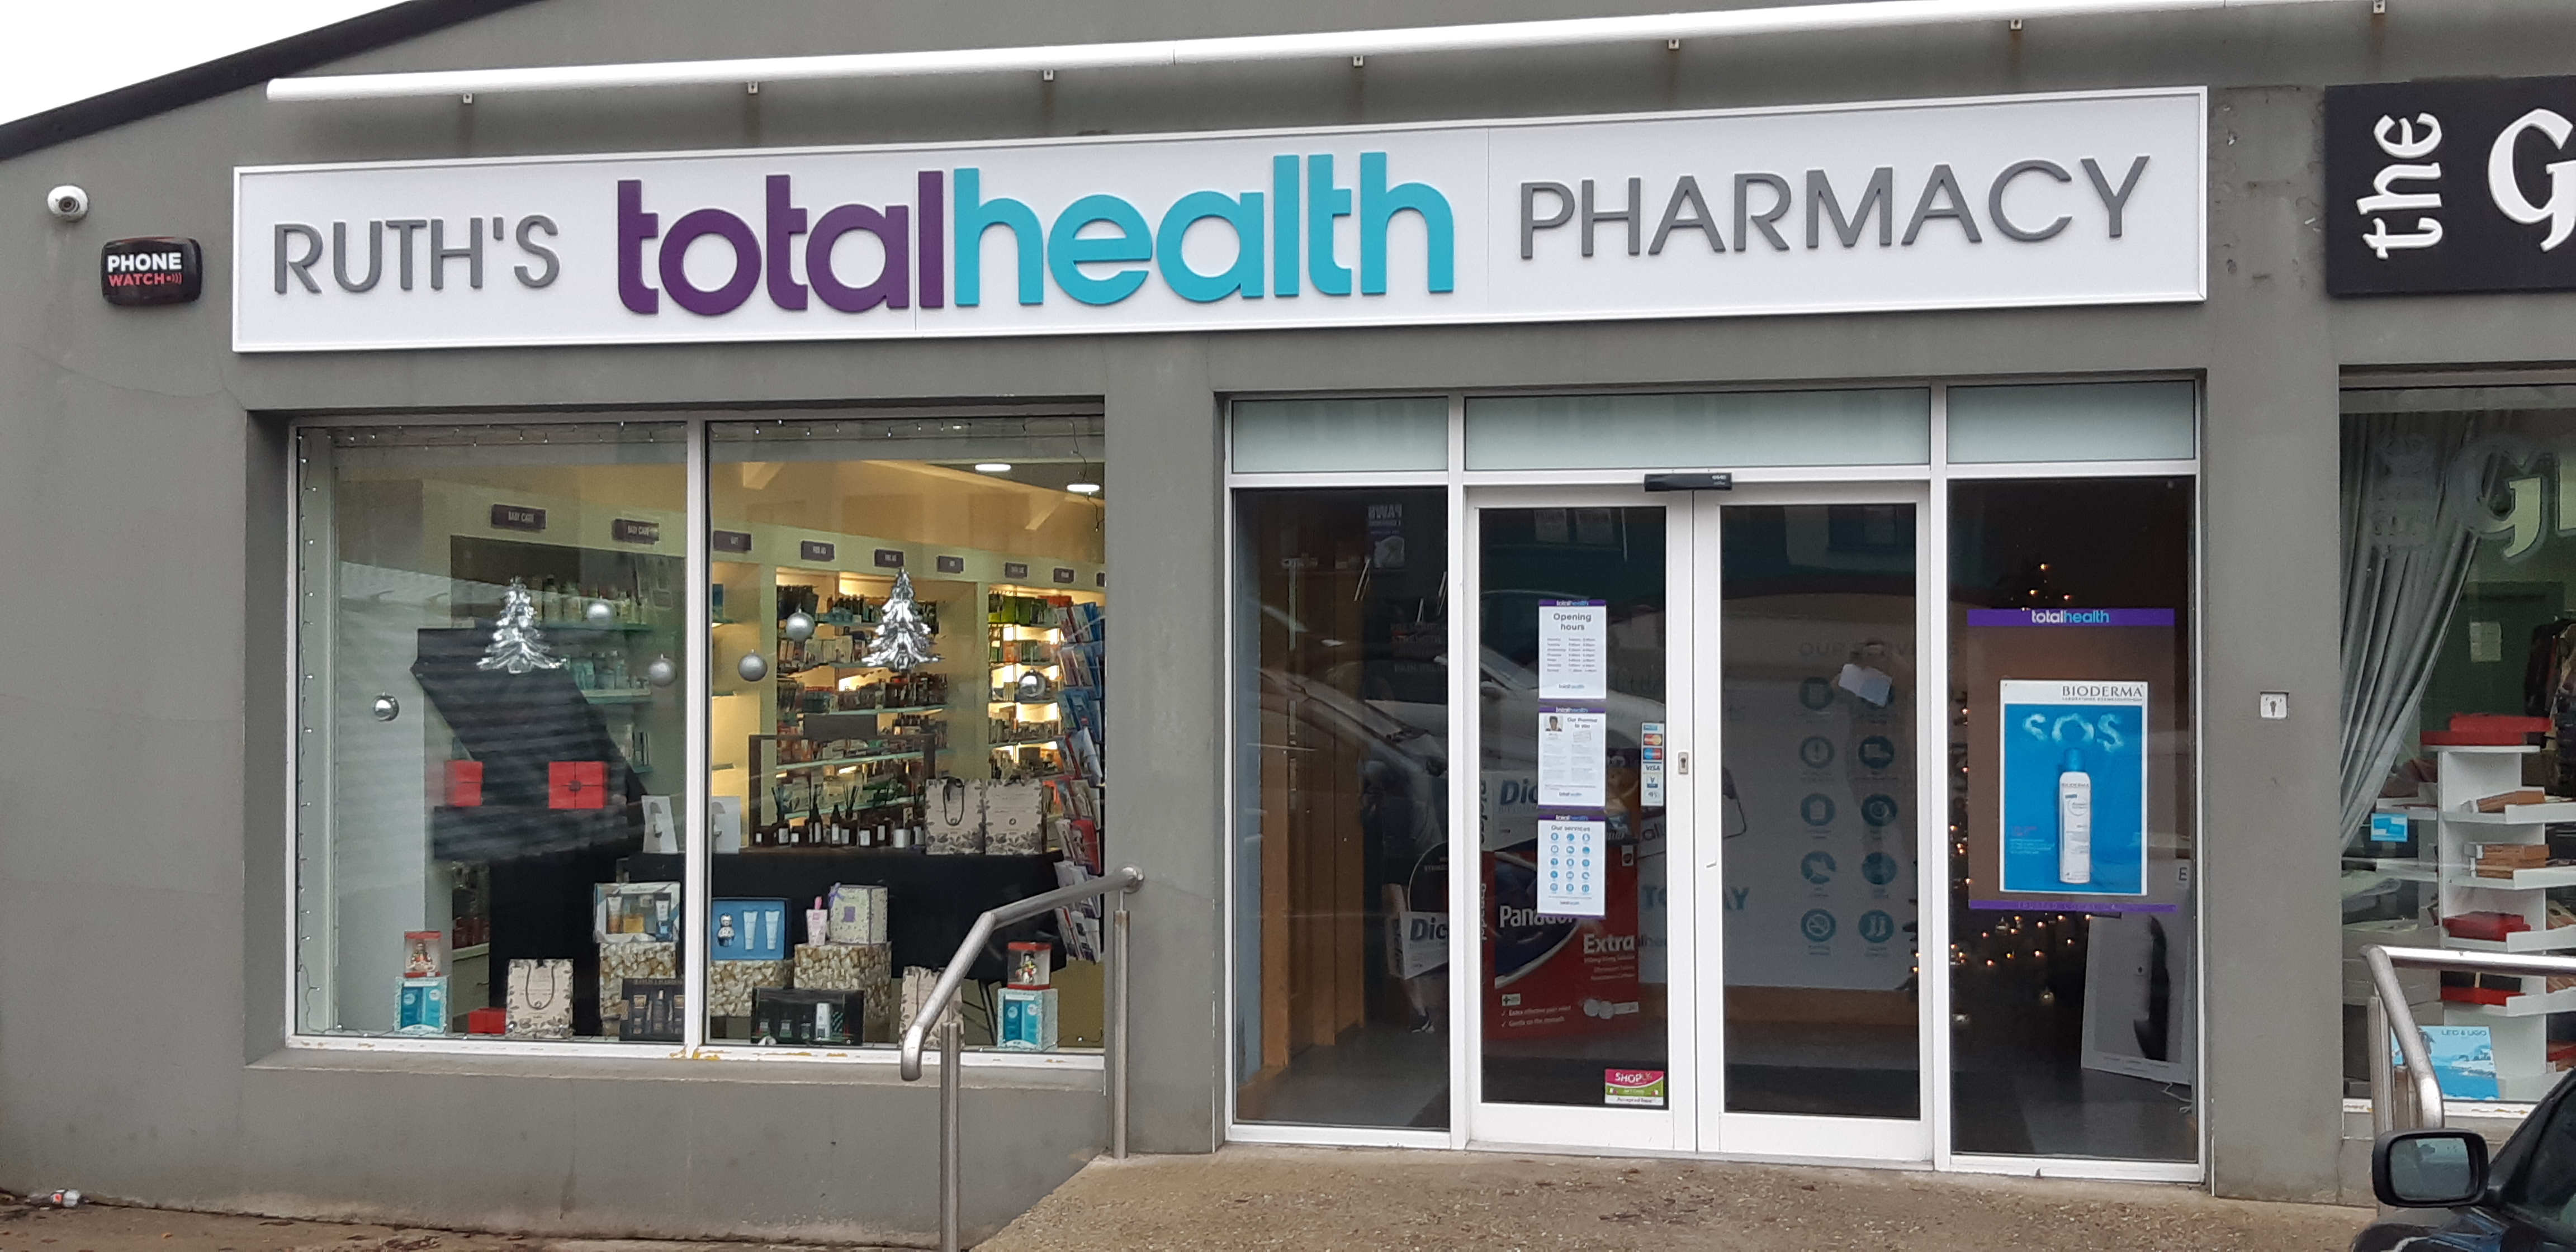 Ruth's totalhealth Pharmacy - Pearse Road